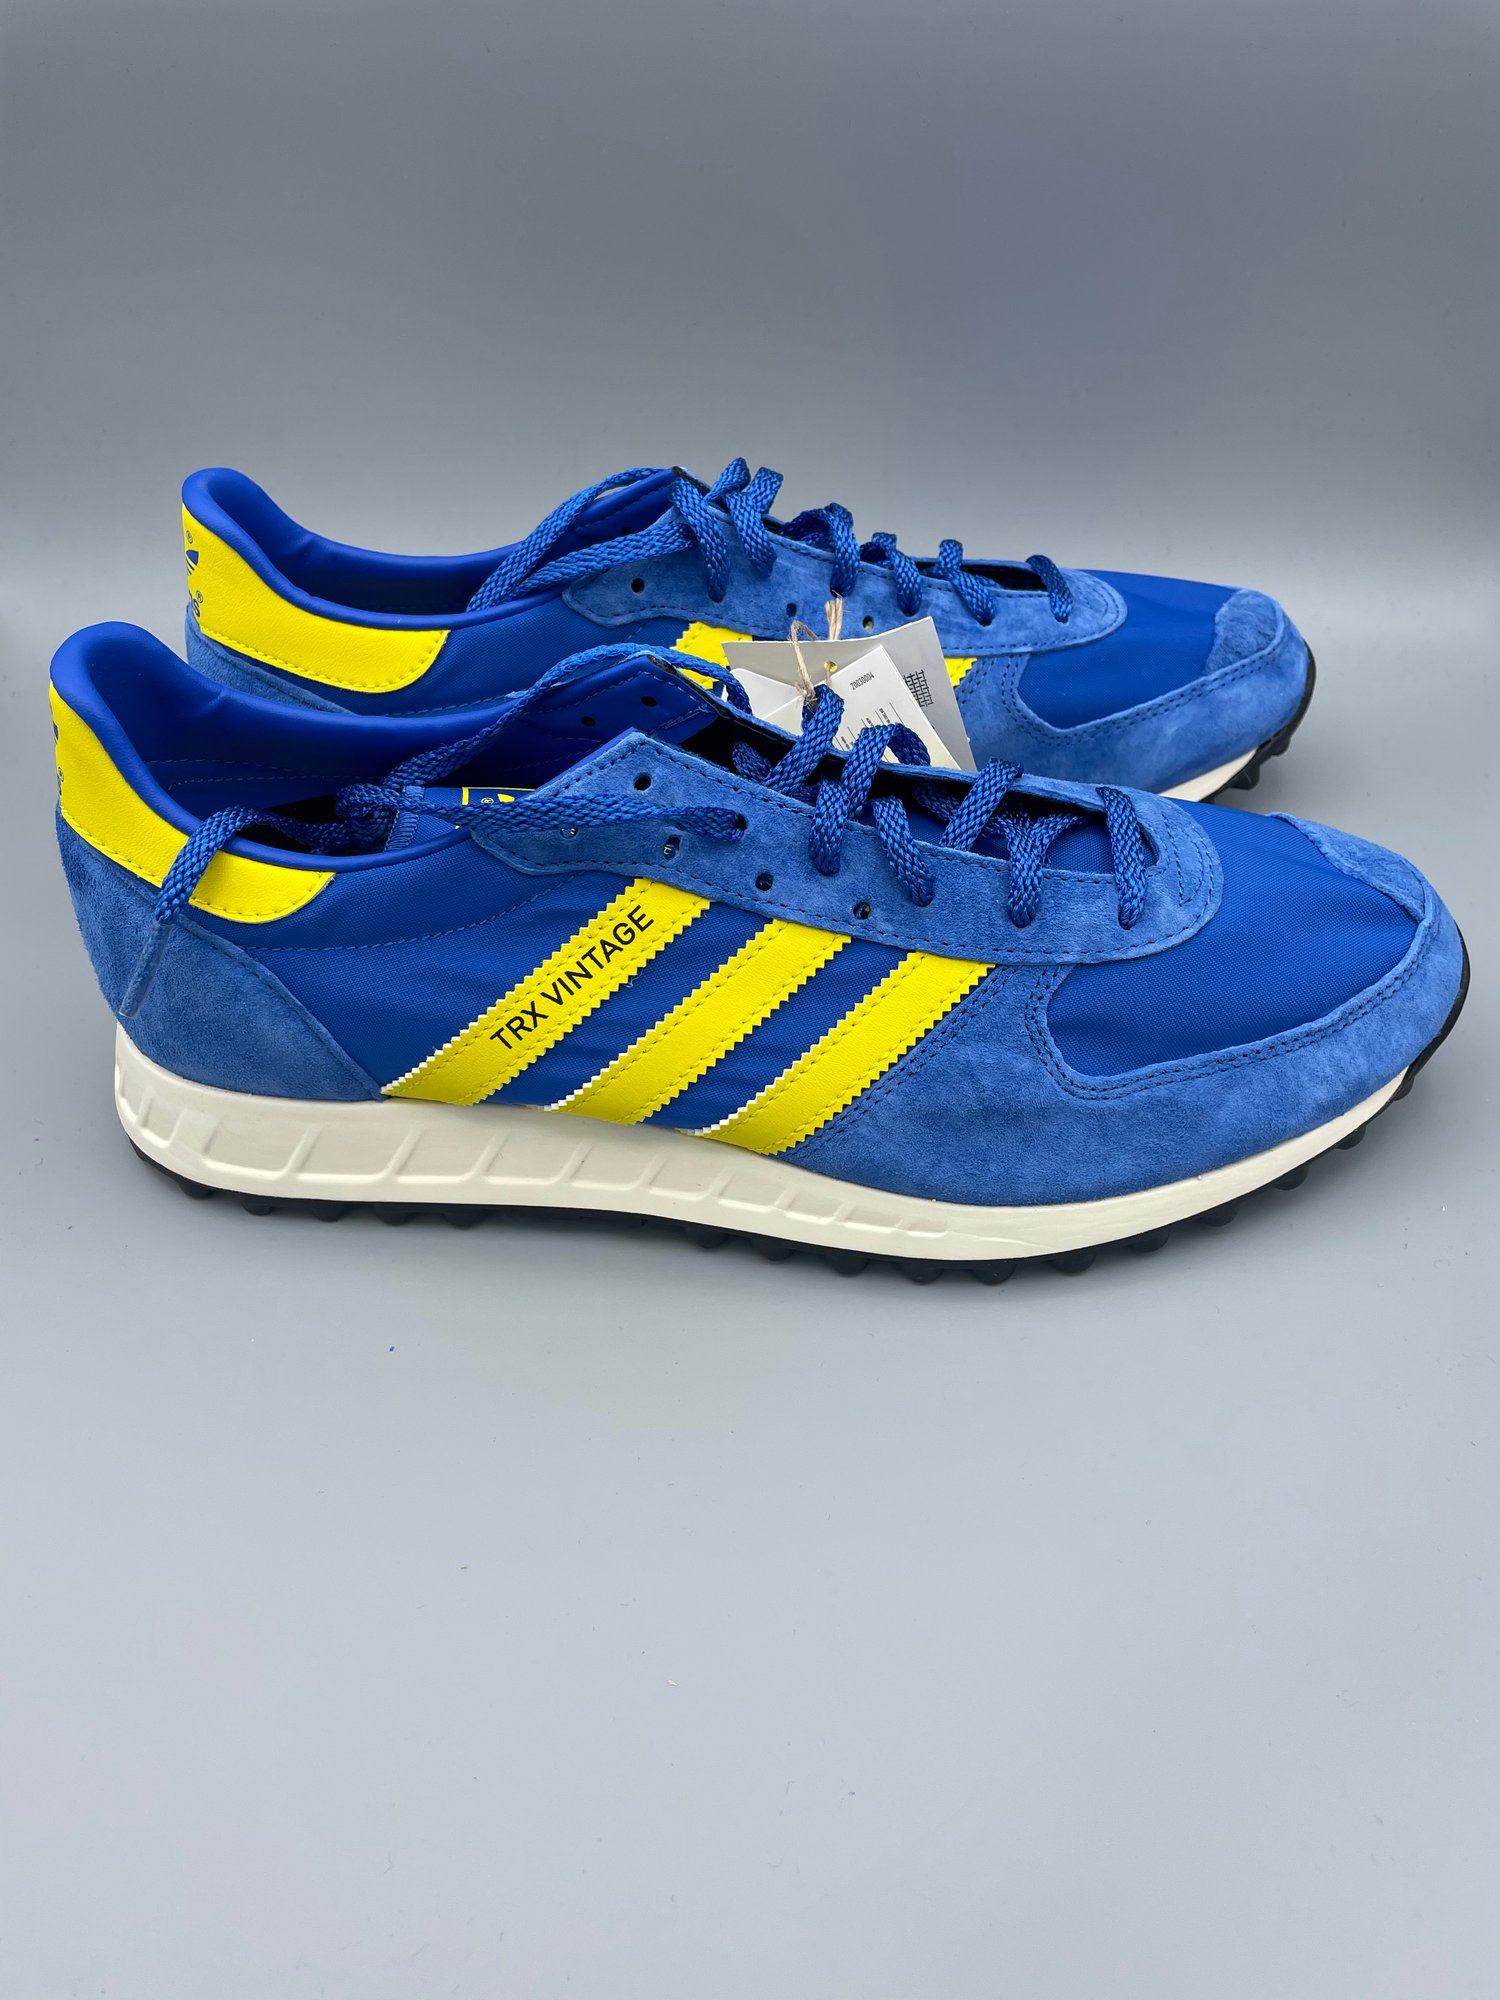 Adidas TRX Blue/yellow - UK9.5 | OriginalSoles